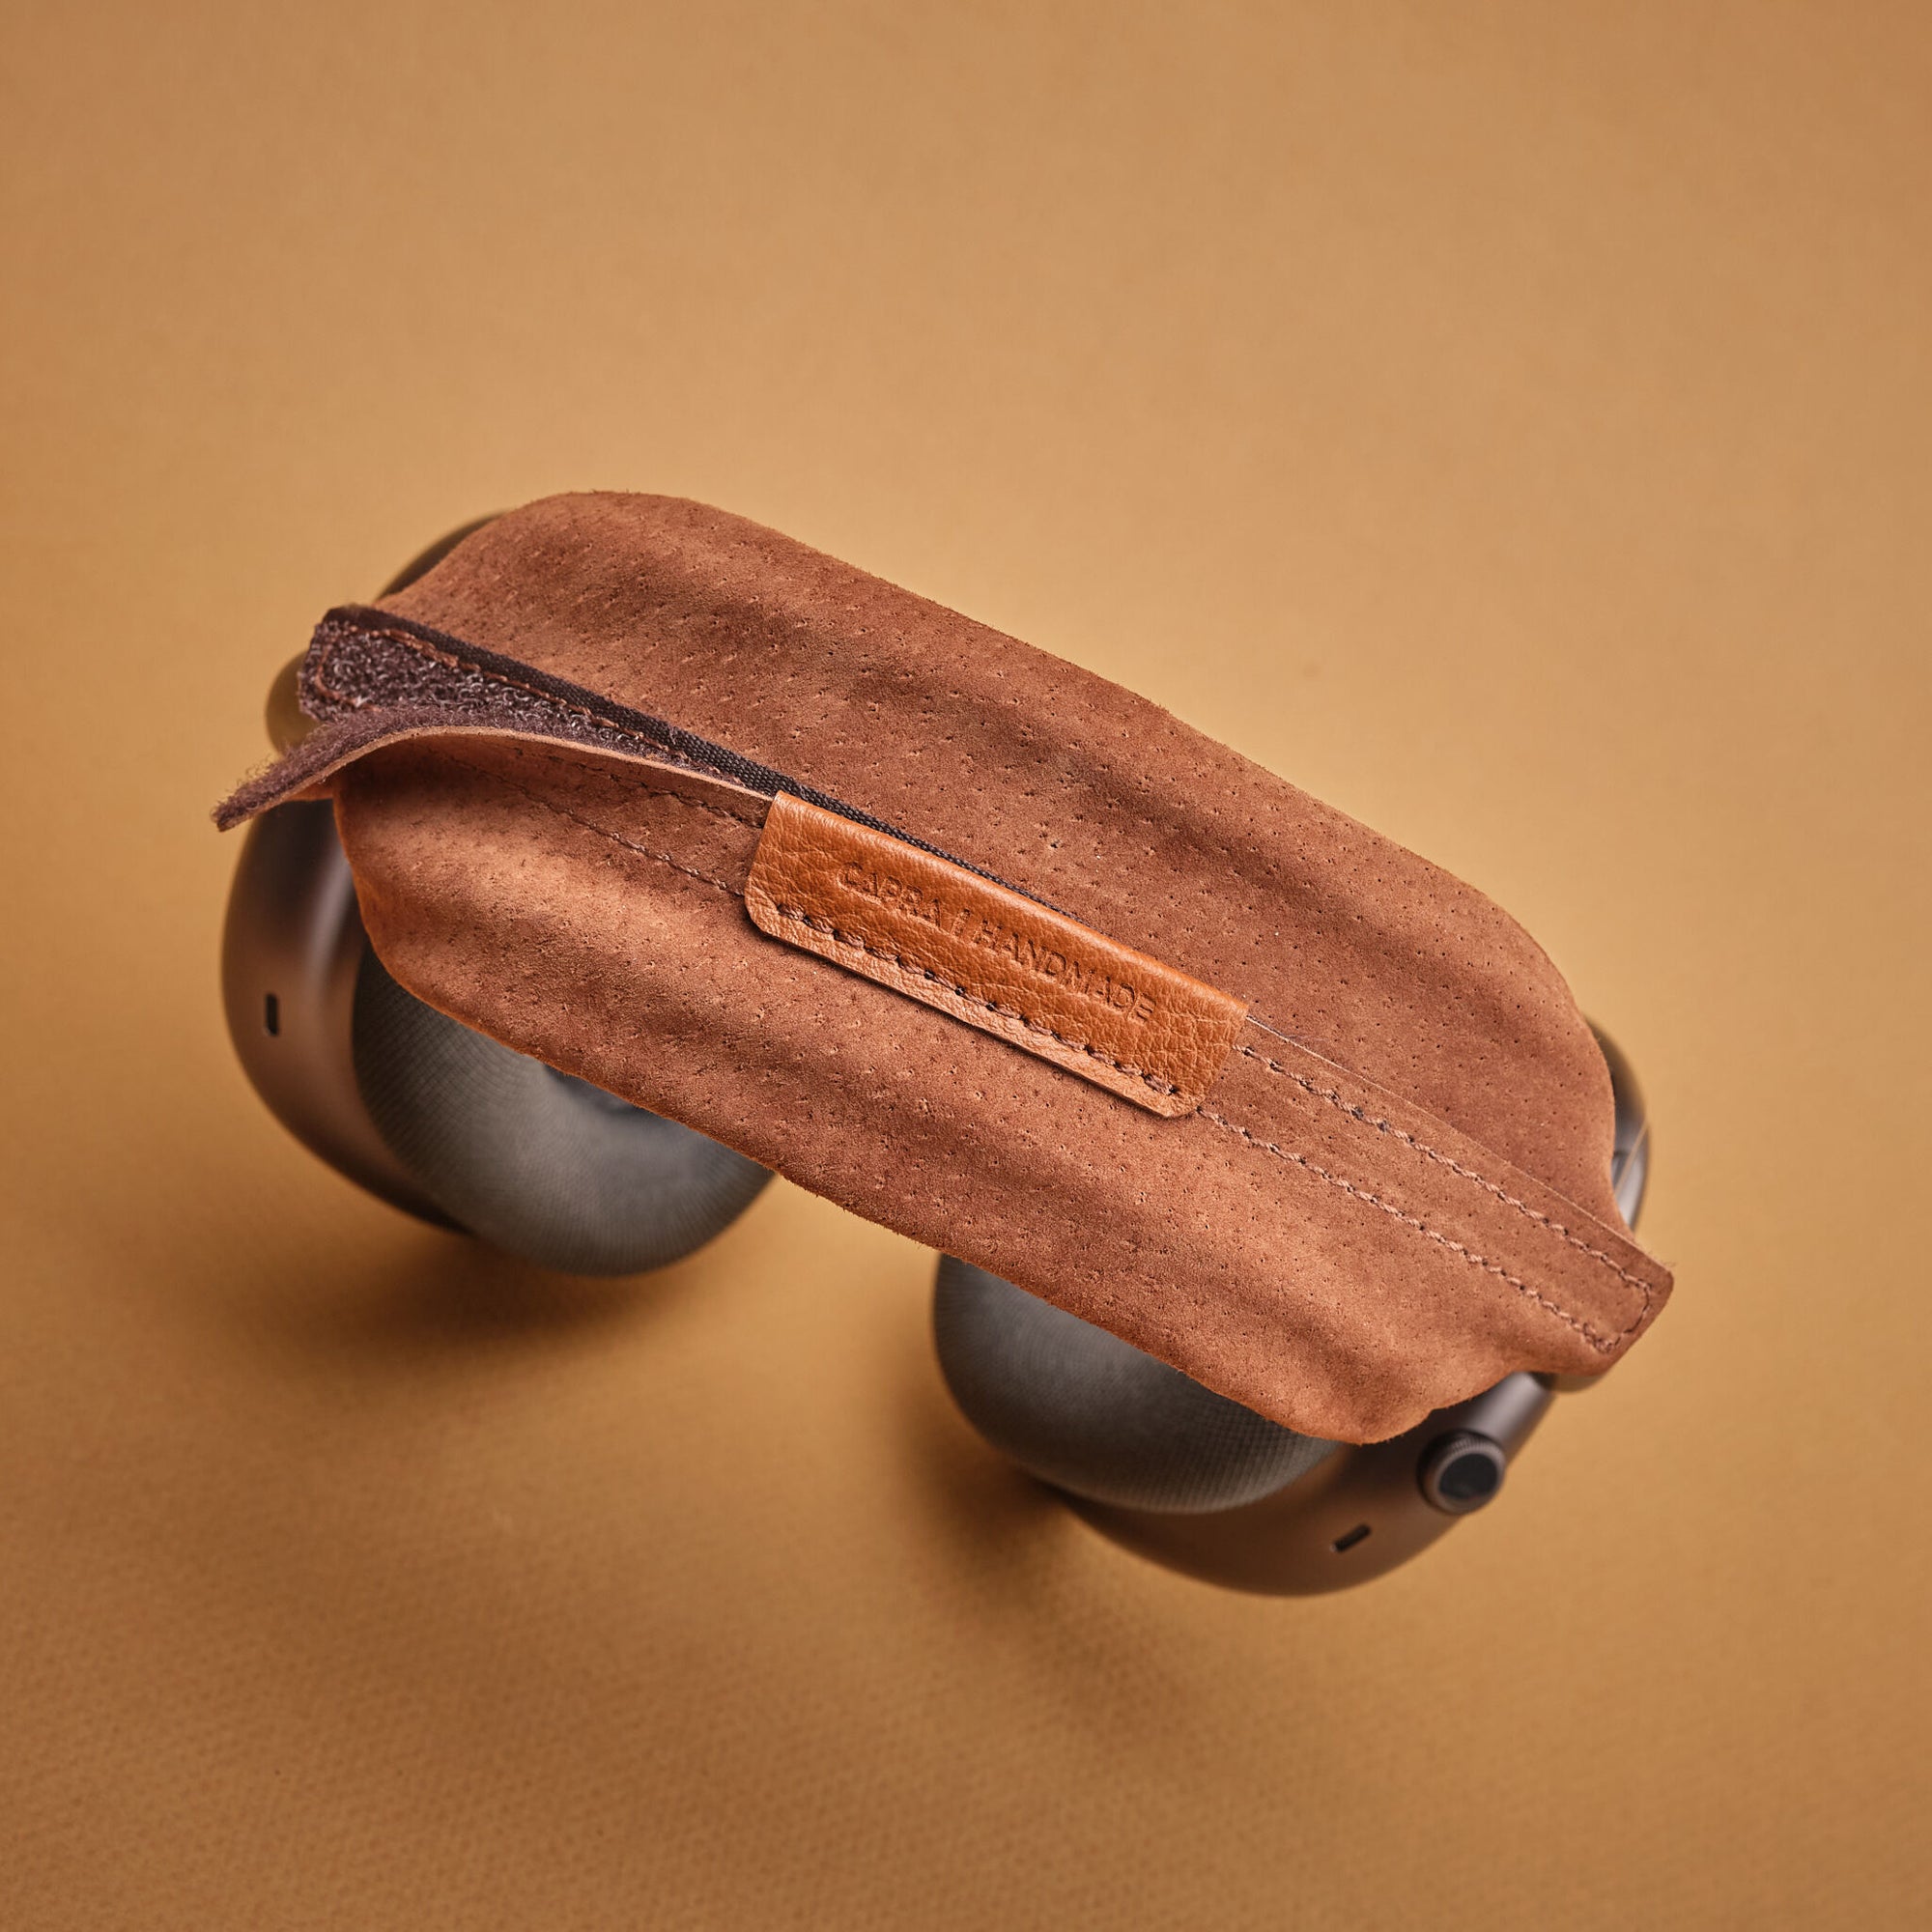 Apple AirPods Max. Headset Headphone Headband Cushion Tan by Capra Leather